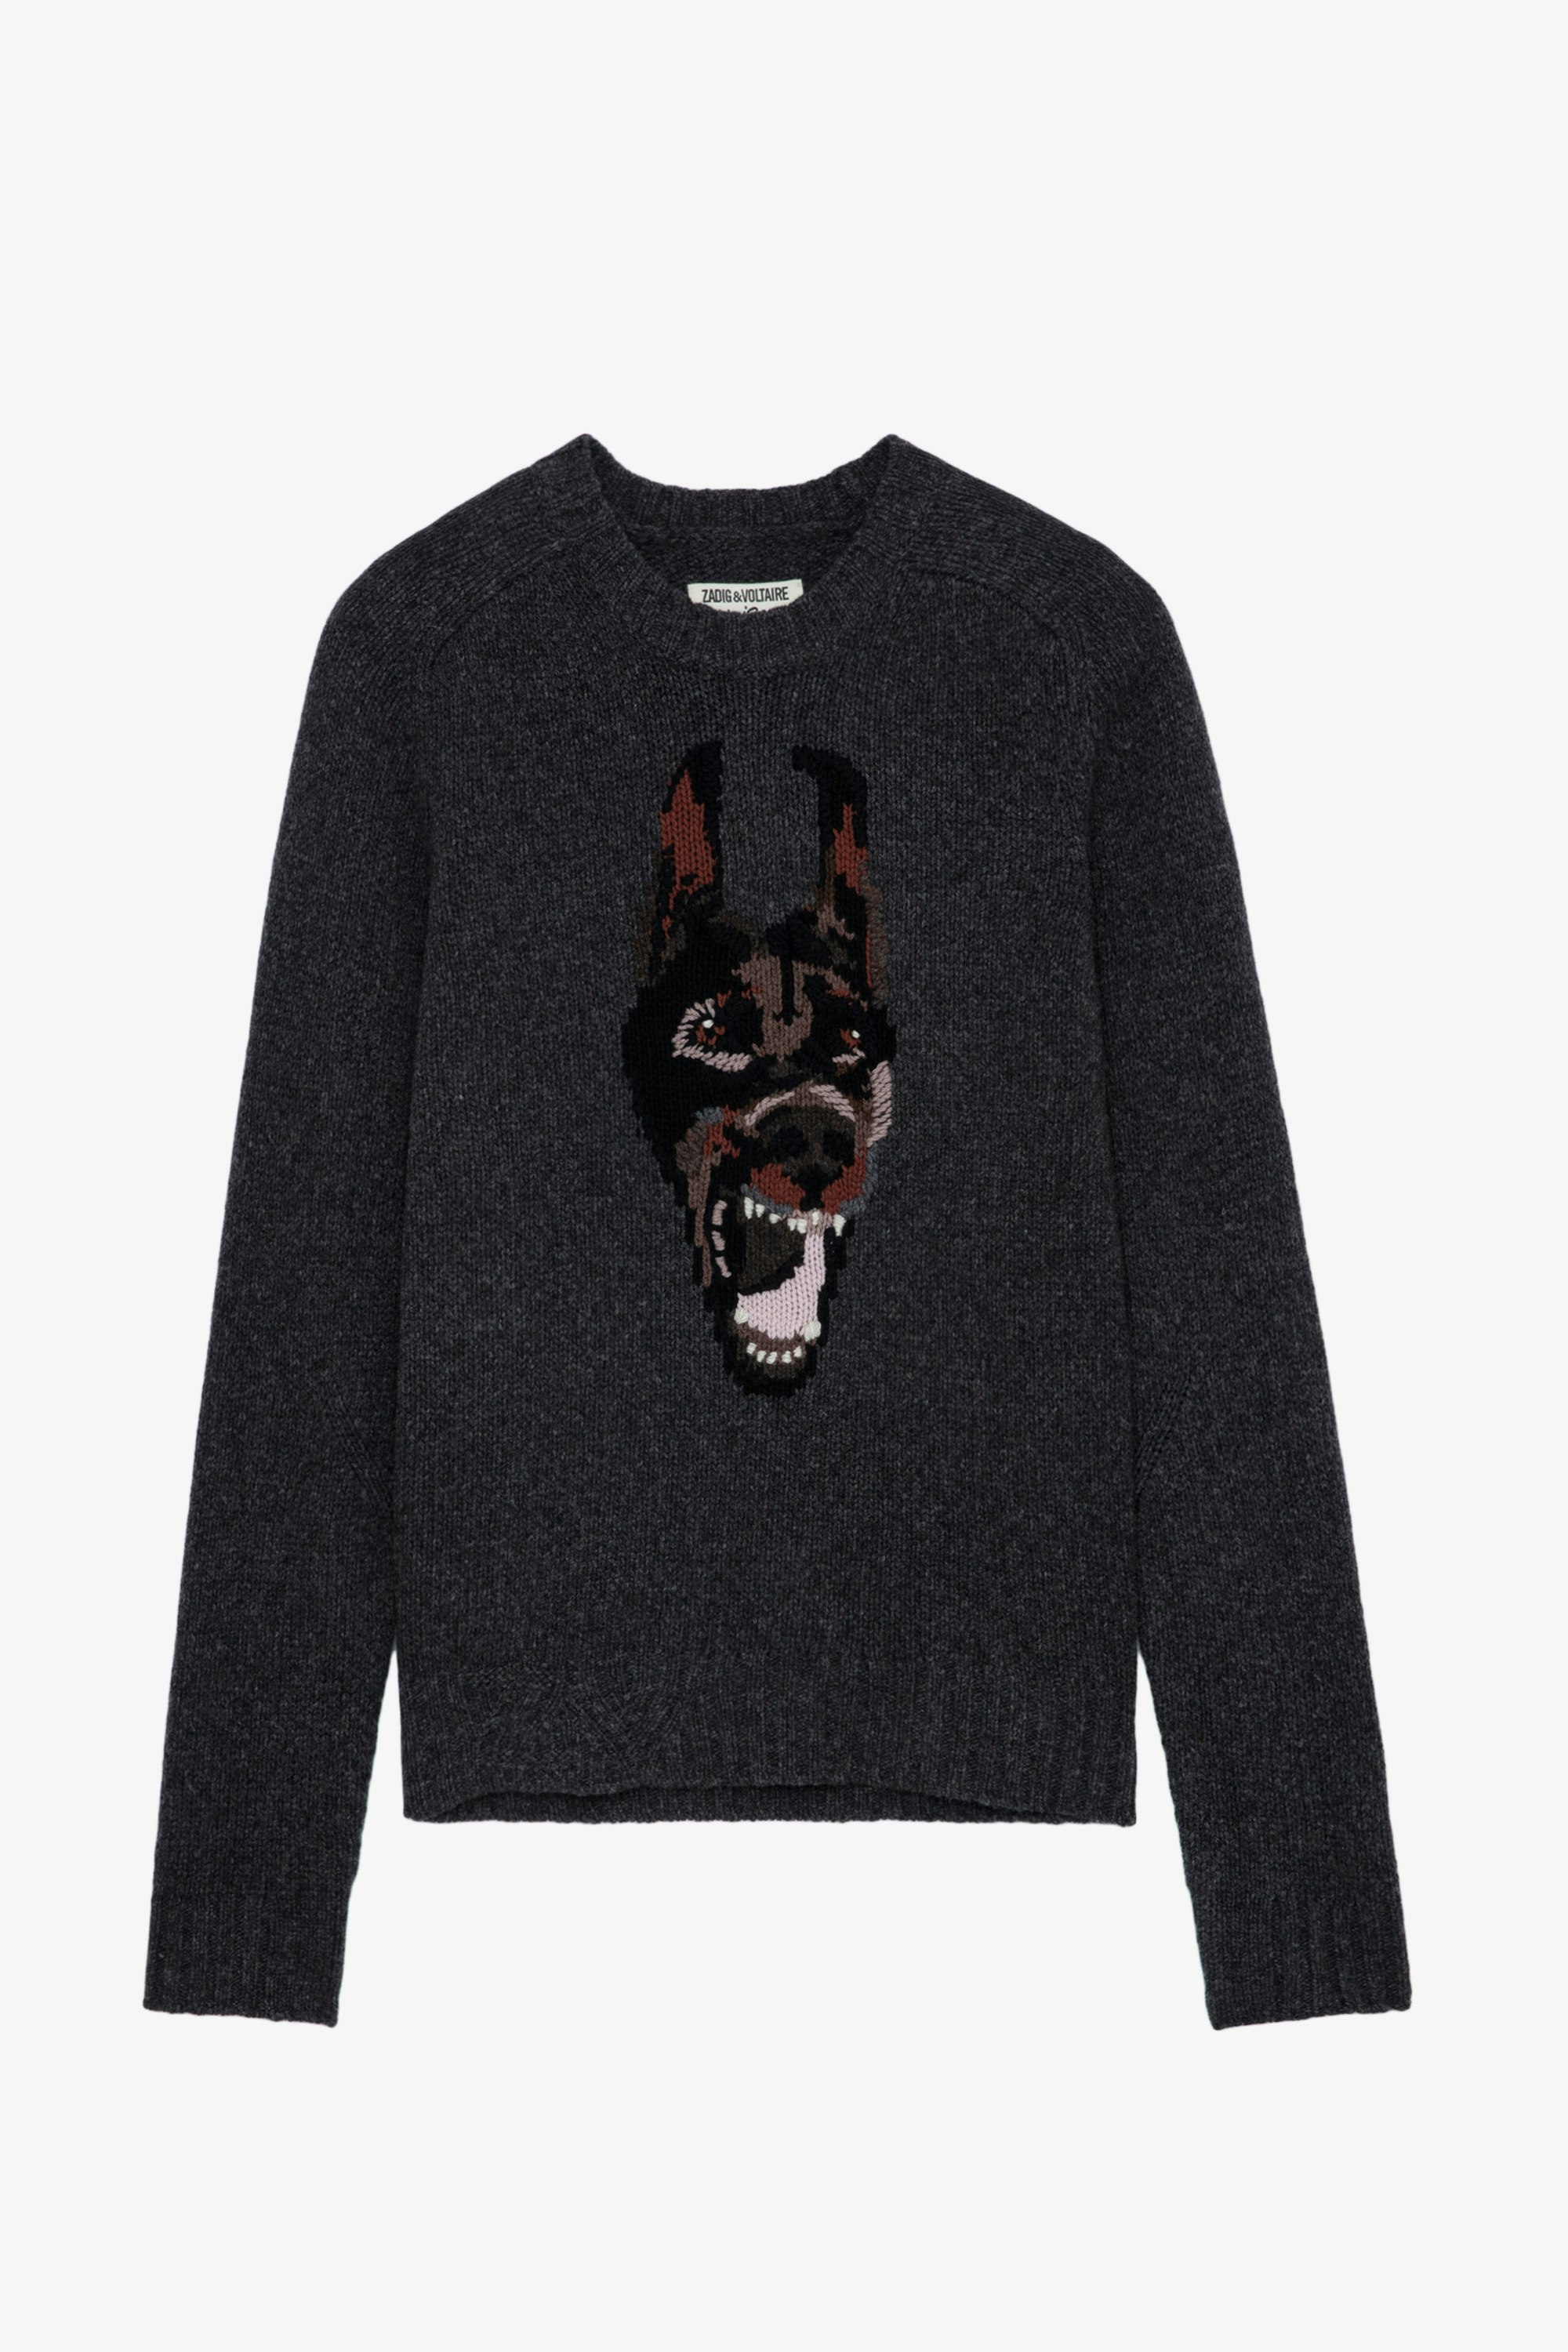 Jordan Sweater - Dark grey merino wool round-neck jumper with long sleeves and Doberman motif.